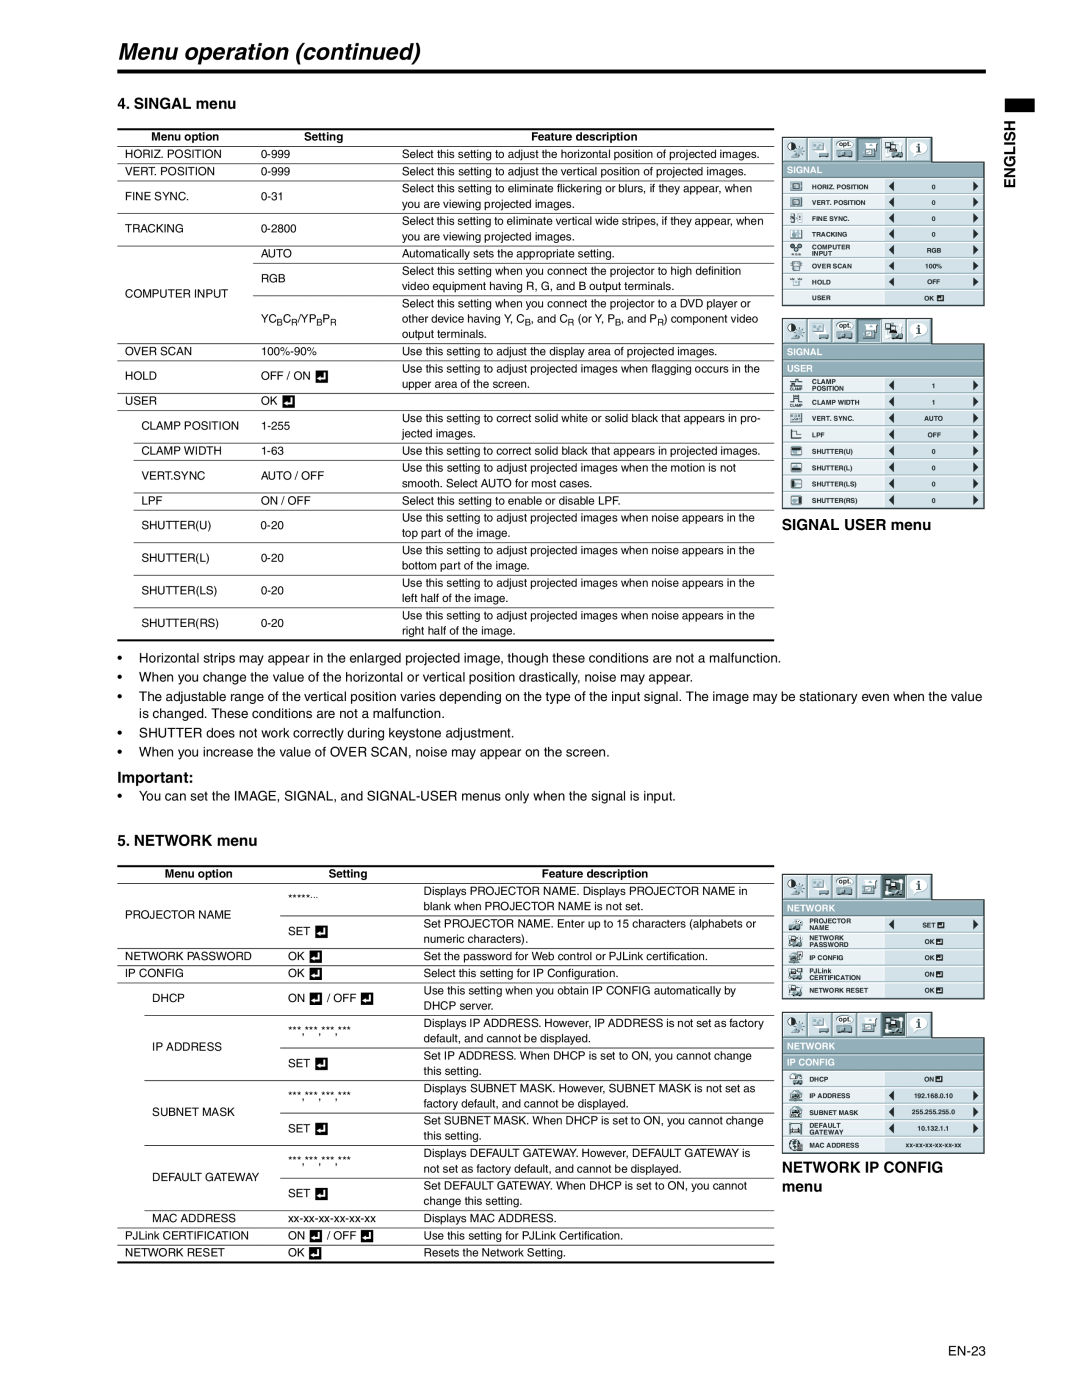 Mitsubishi Electronics XD250U-ST SINGAL menu, SIGNAL USER menu, NETWORK menu, Network Ip Config, Menu operation continued 